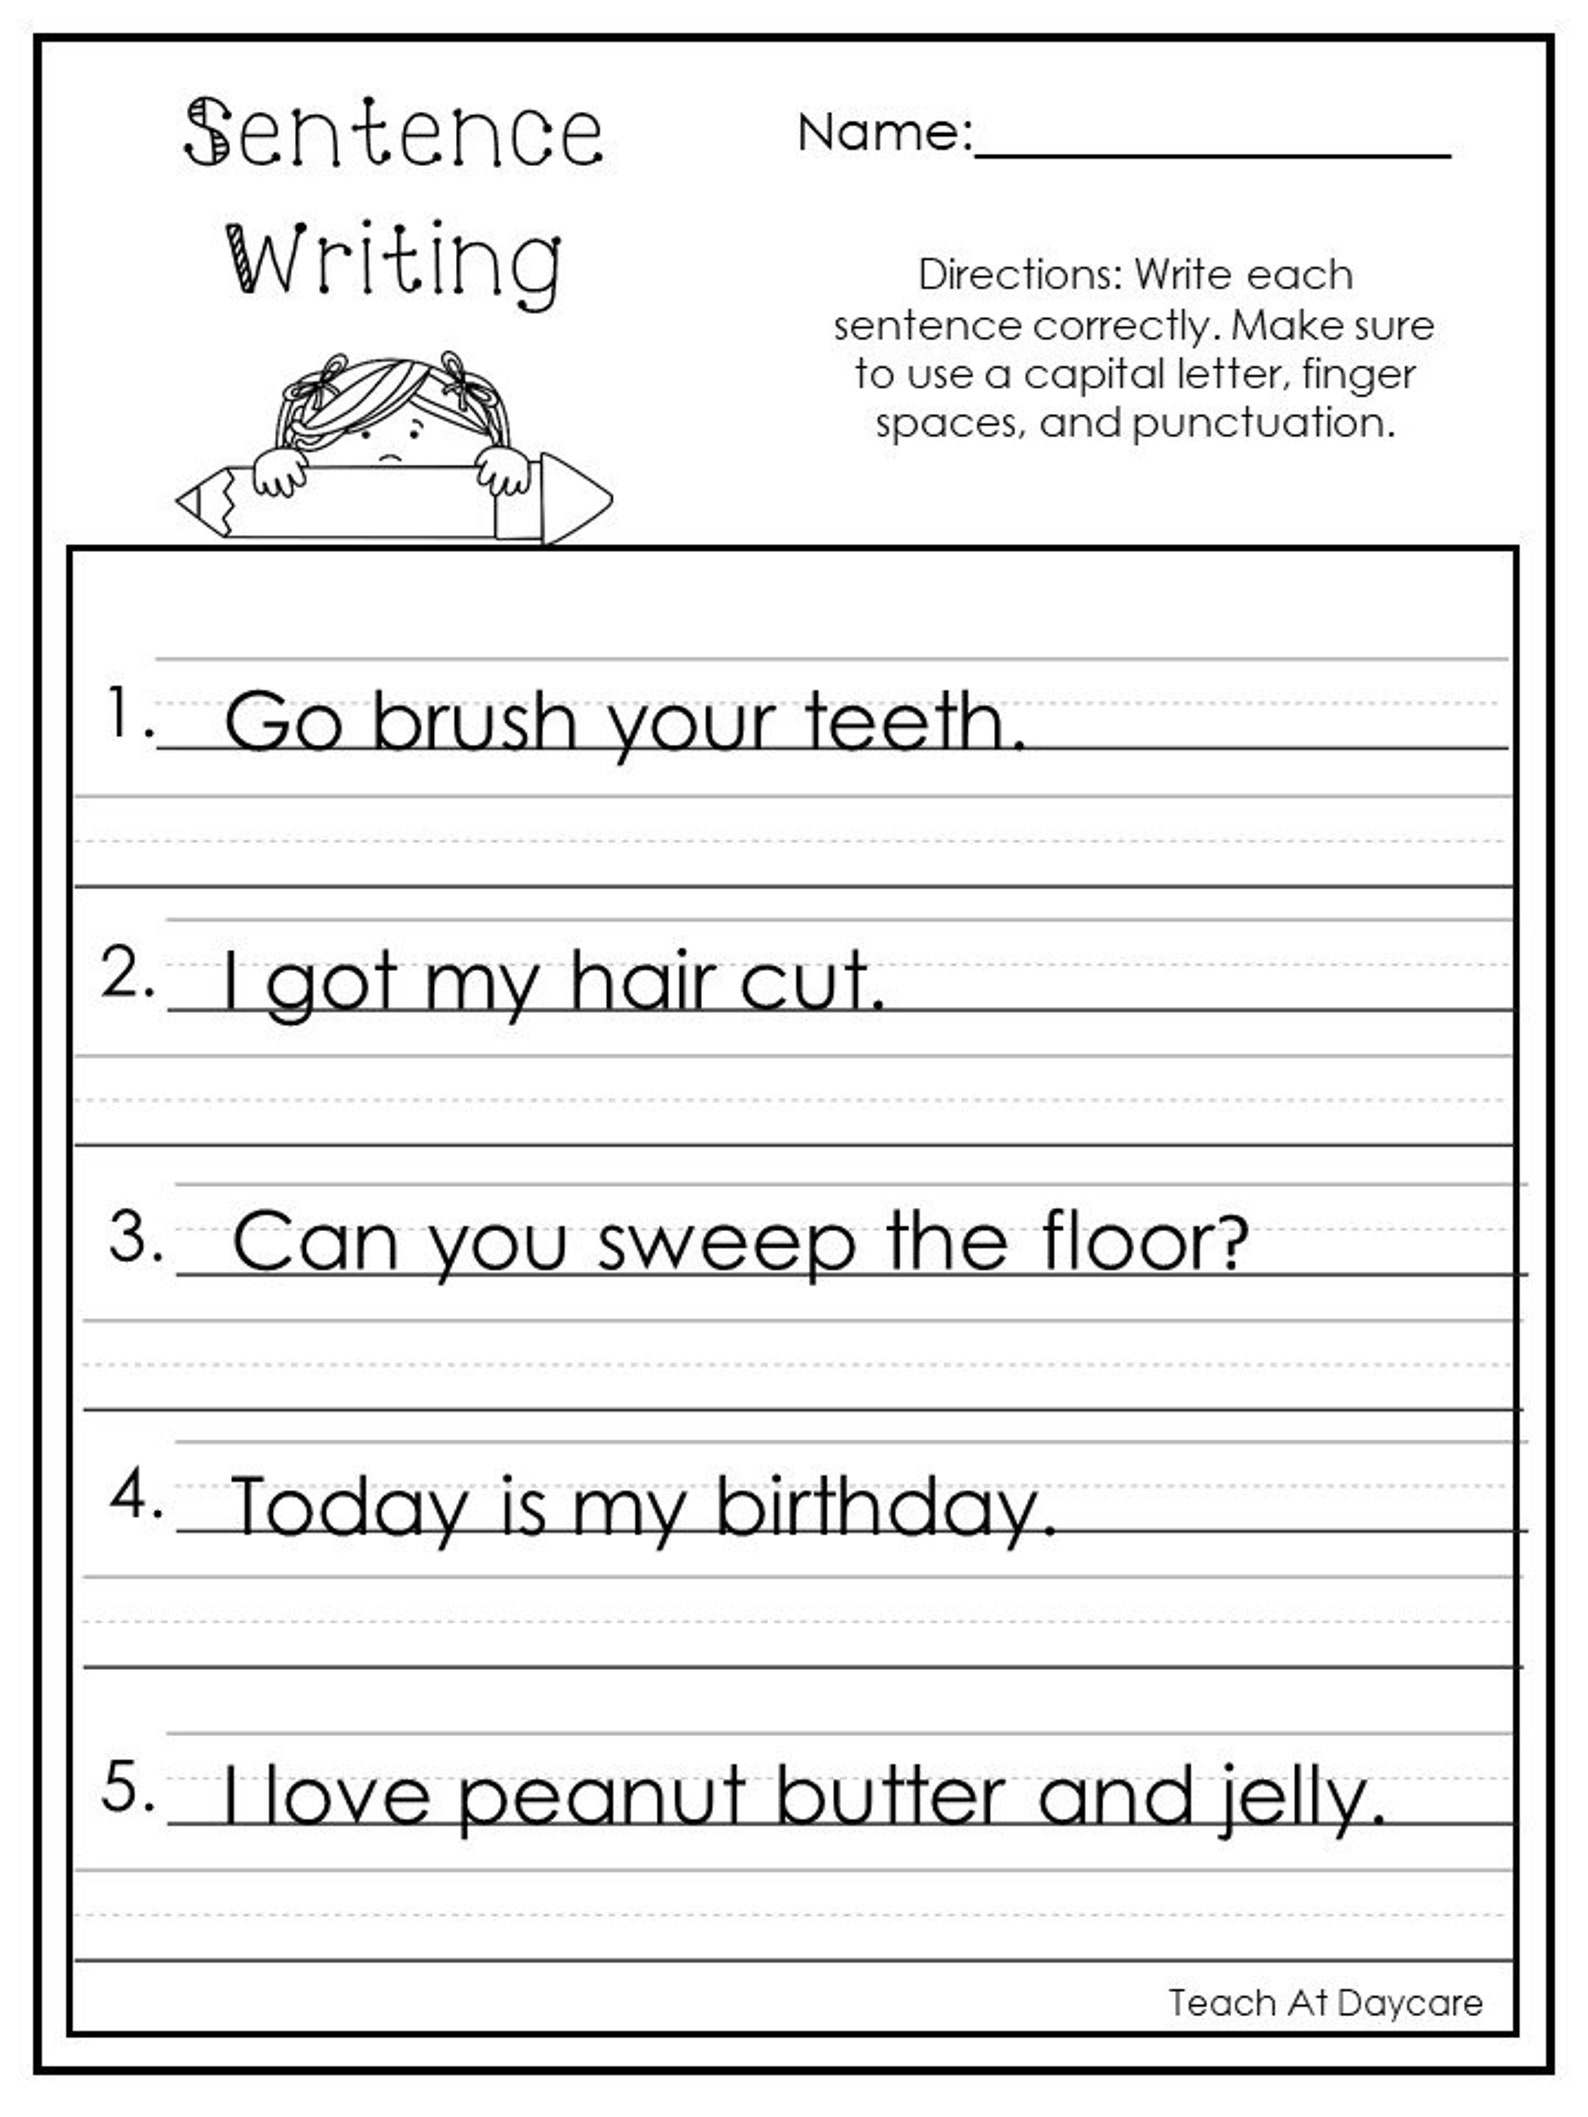 Writing Sentence Worksheets